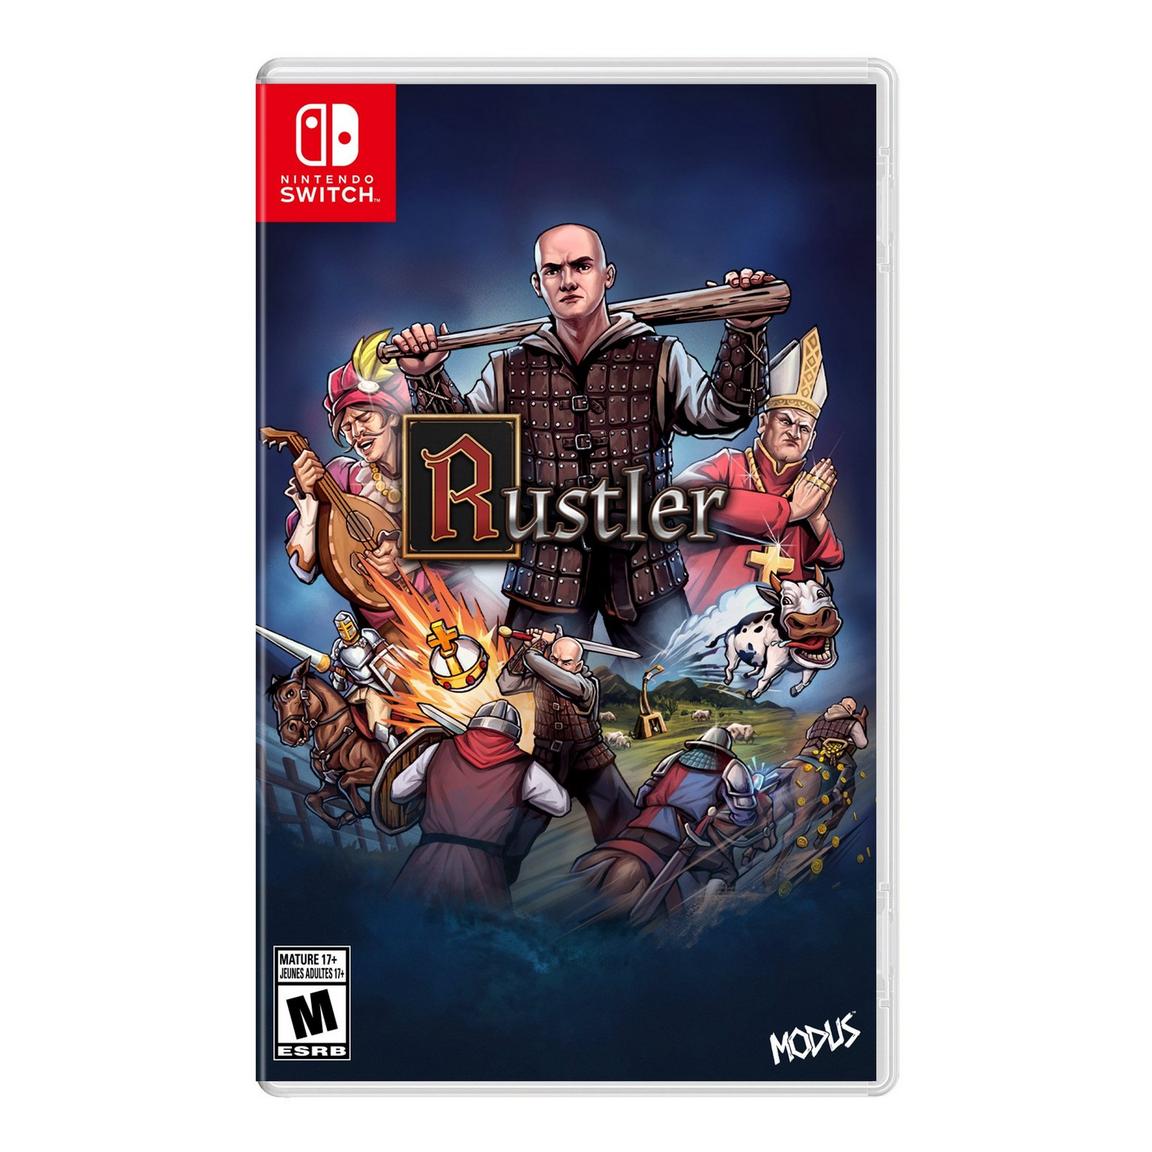 Rustler (NSW, XboxOne, PS4) 10 at Gamestop ymmv $10